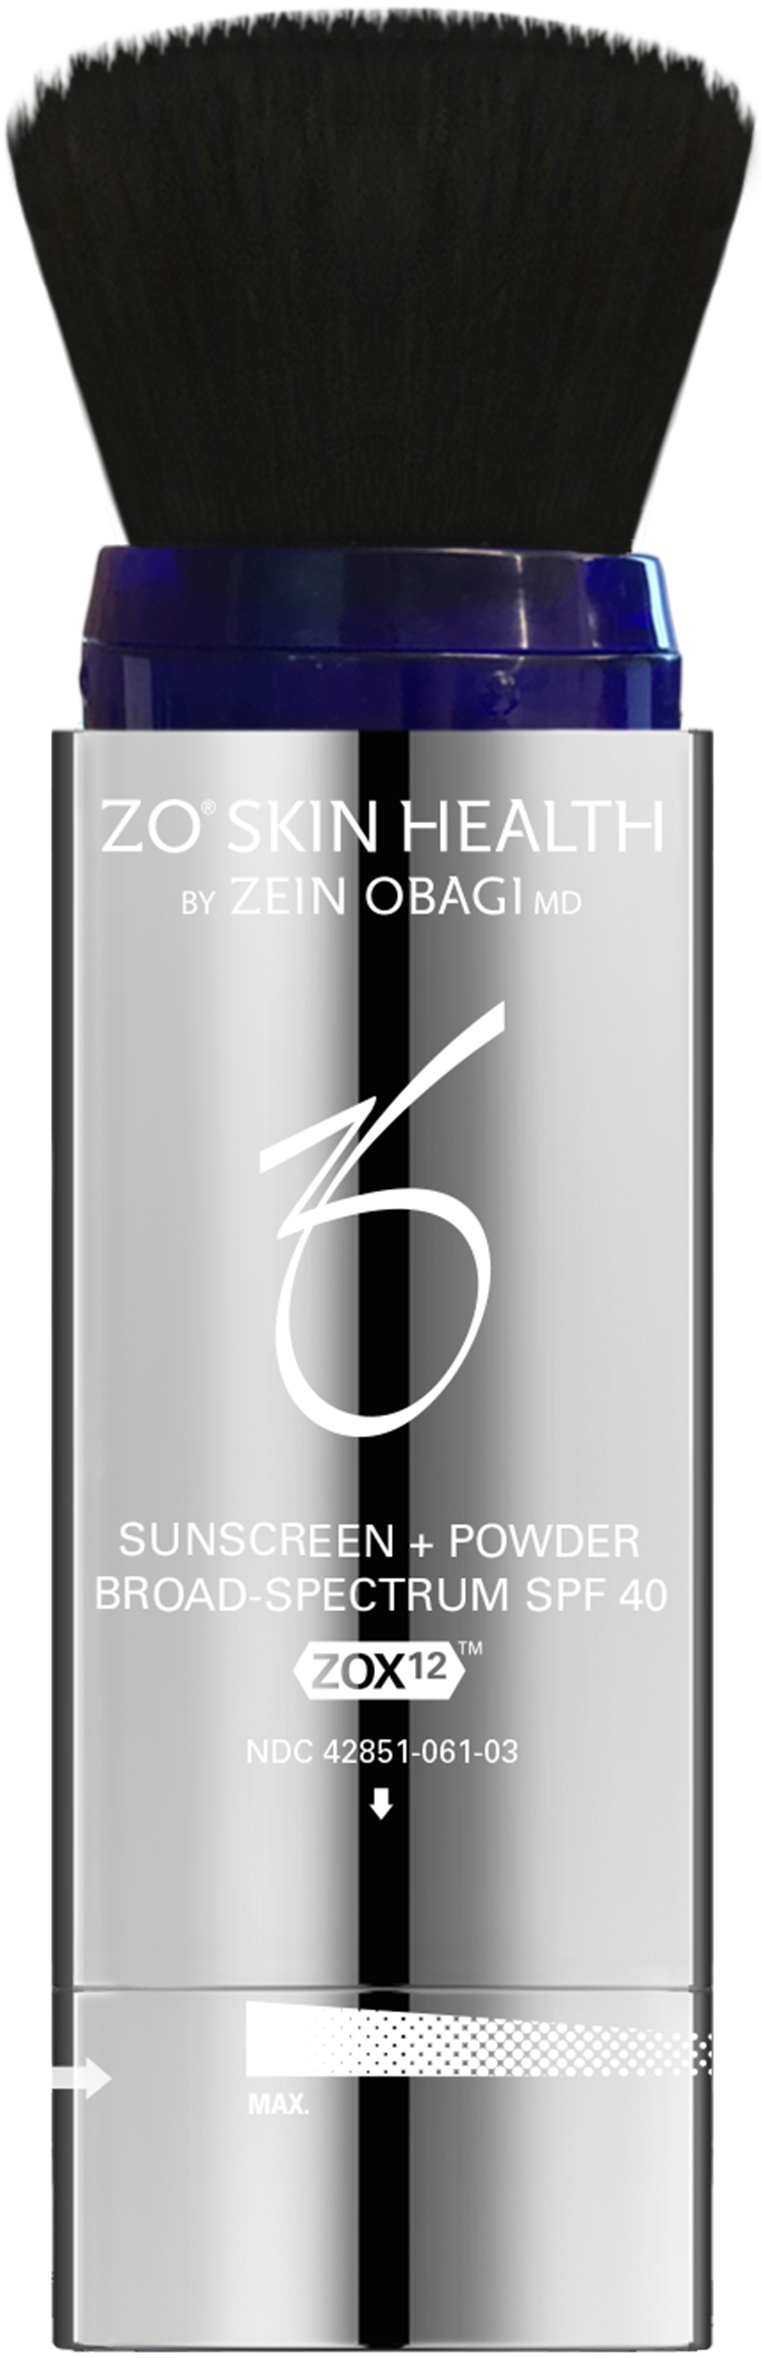 ZO Skin Health - Sunscreen + Powder Broad-Spectrum SPF 40